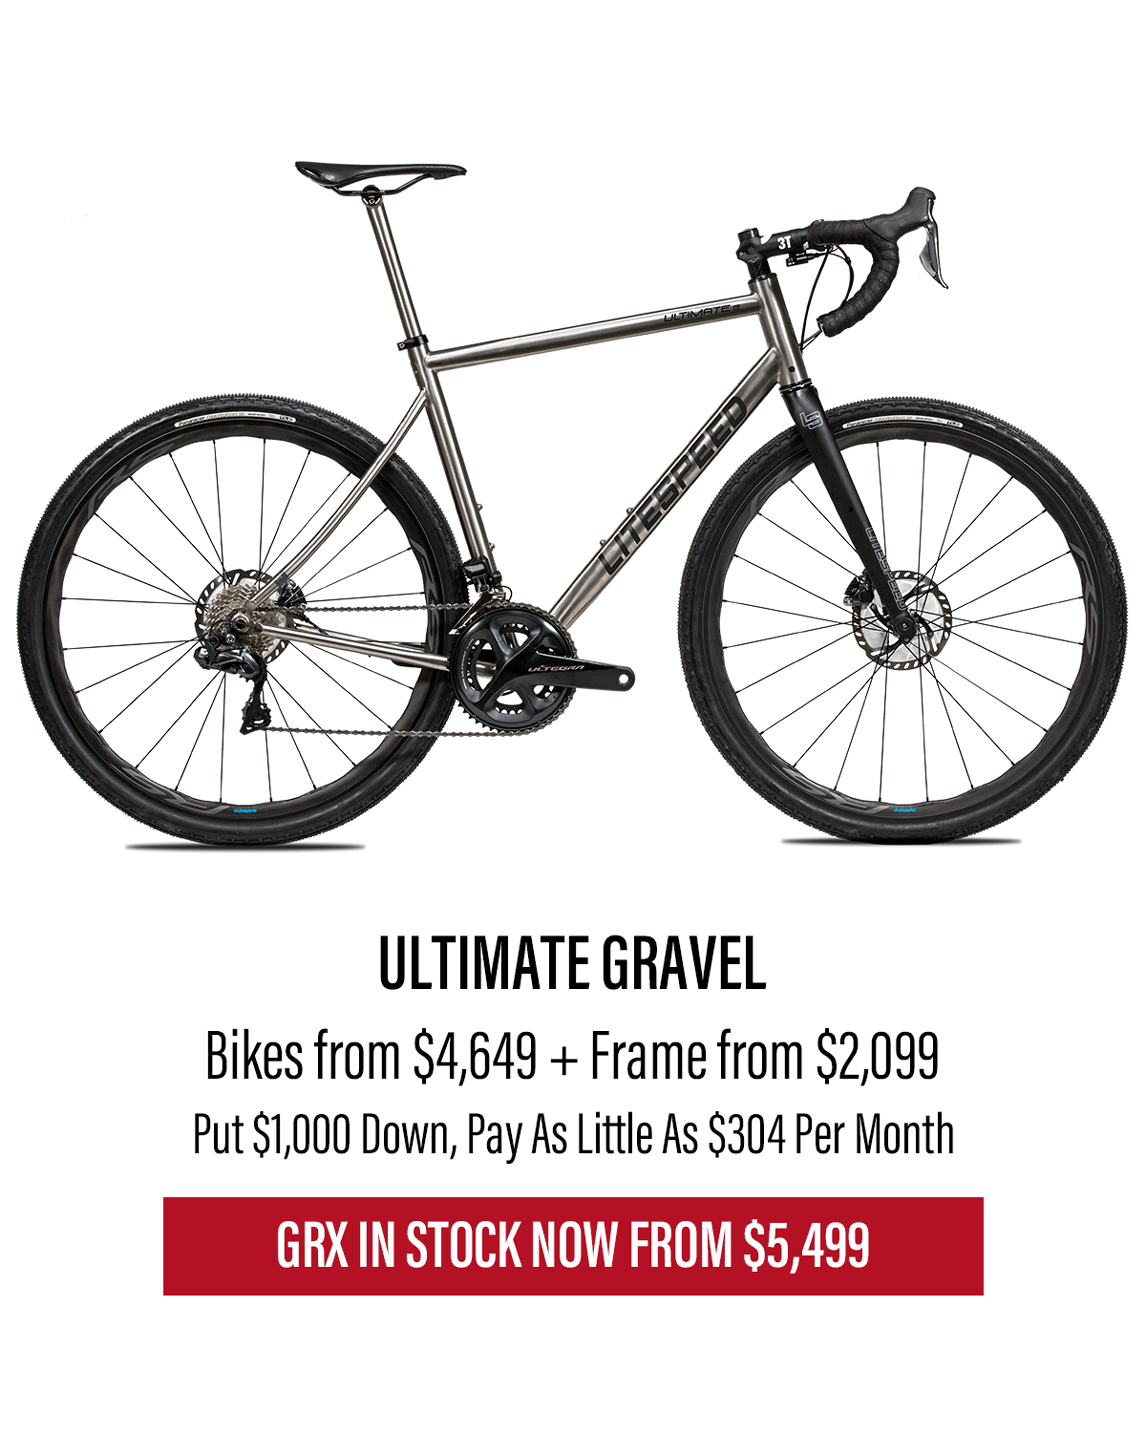 Ultimate Gravel bikes from $4,649.